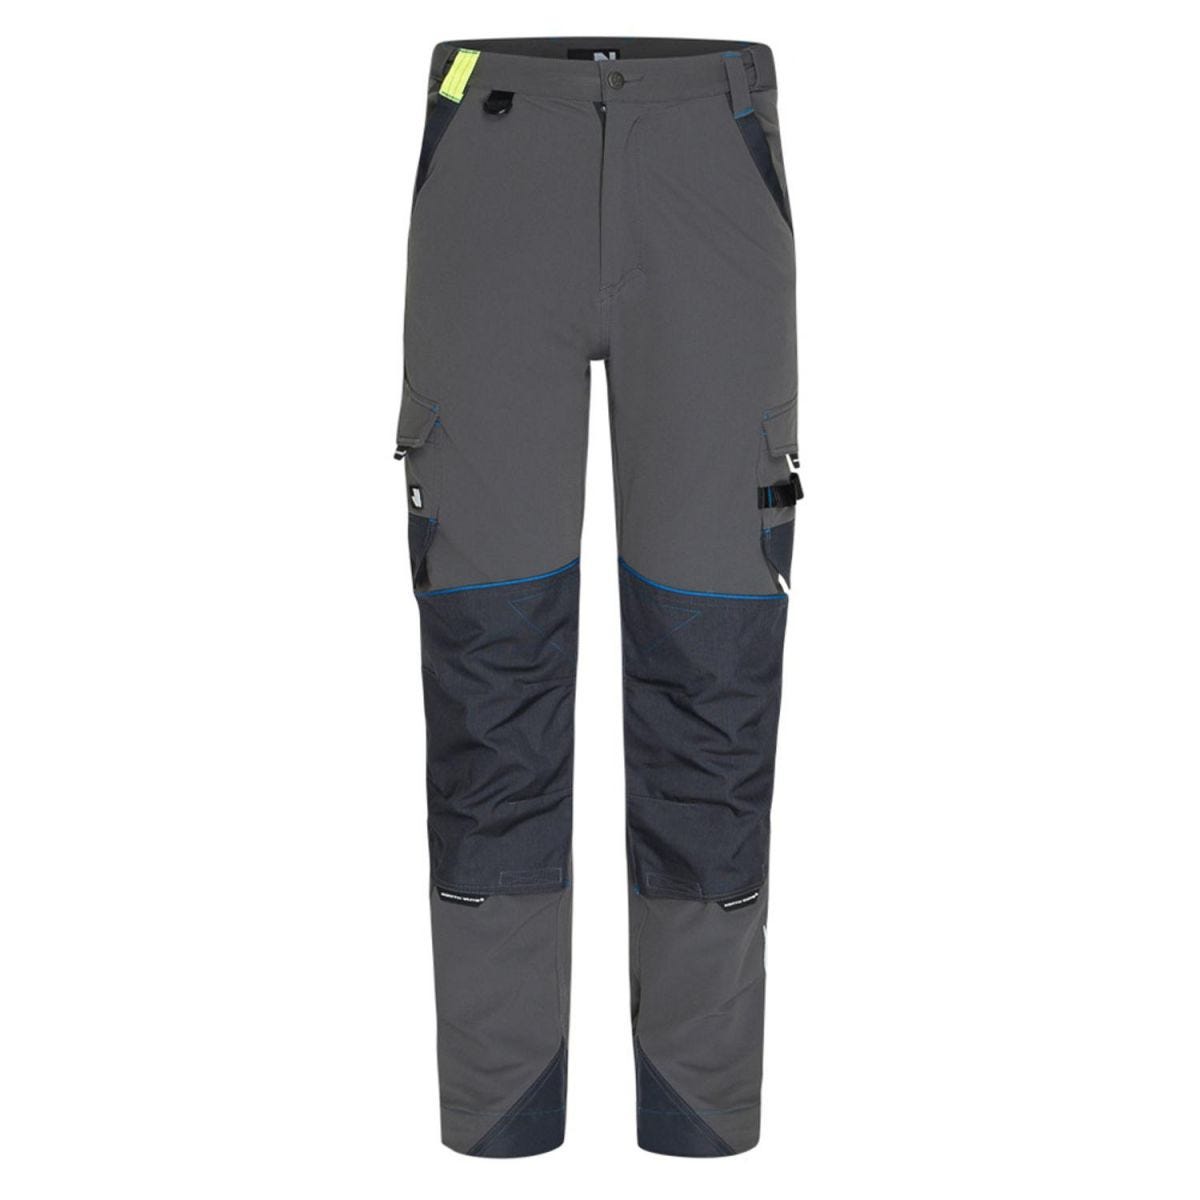 Pantalon de travail SACHA gris/bleu - North Ways - Taille 40 1